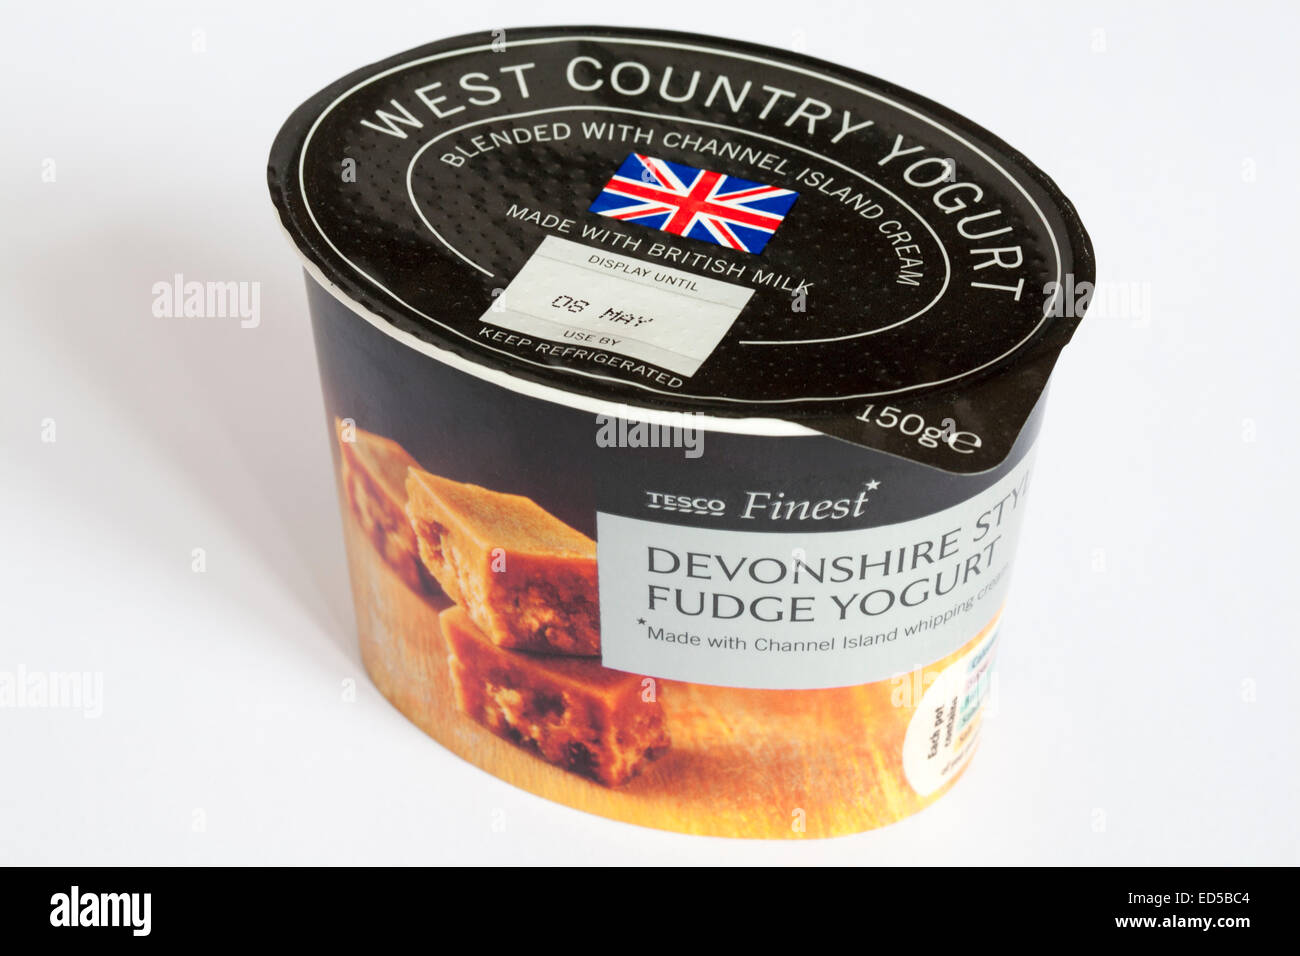 pot of Tesco Finest Devonshire style fudge yogurt with isolated on white background Stock Photo